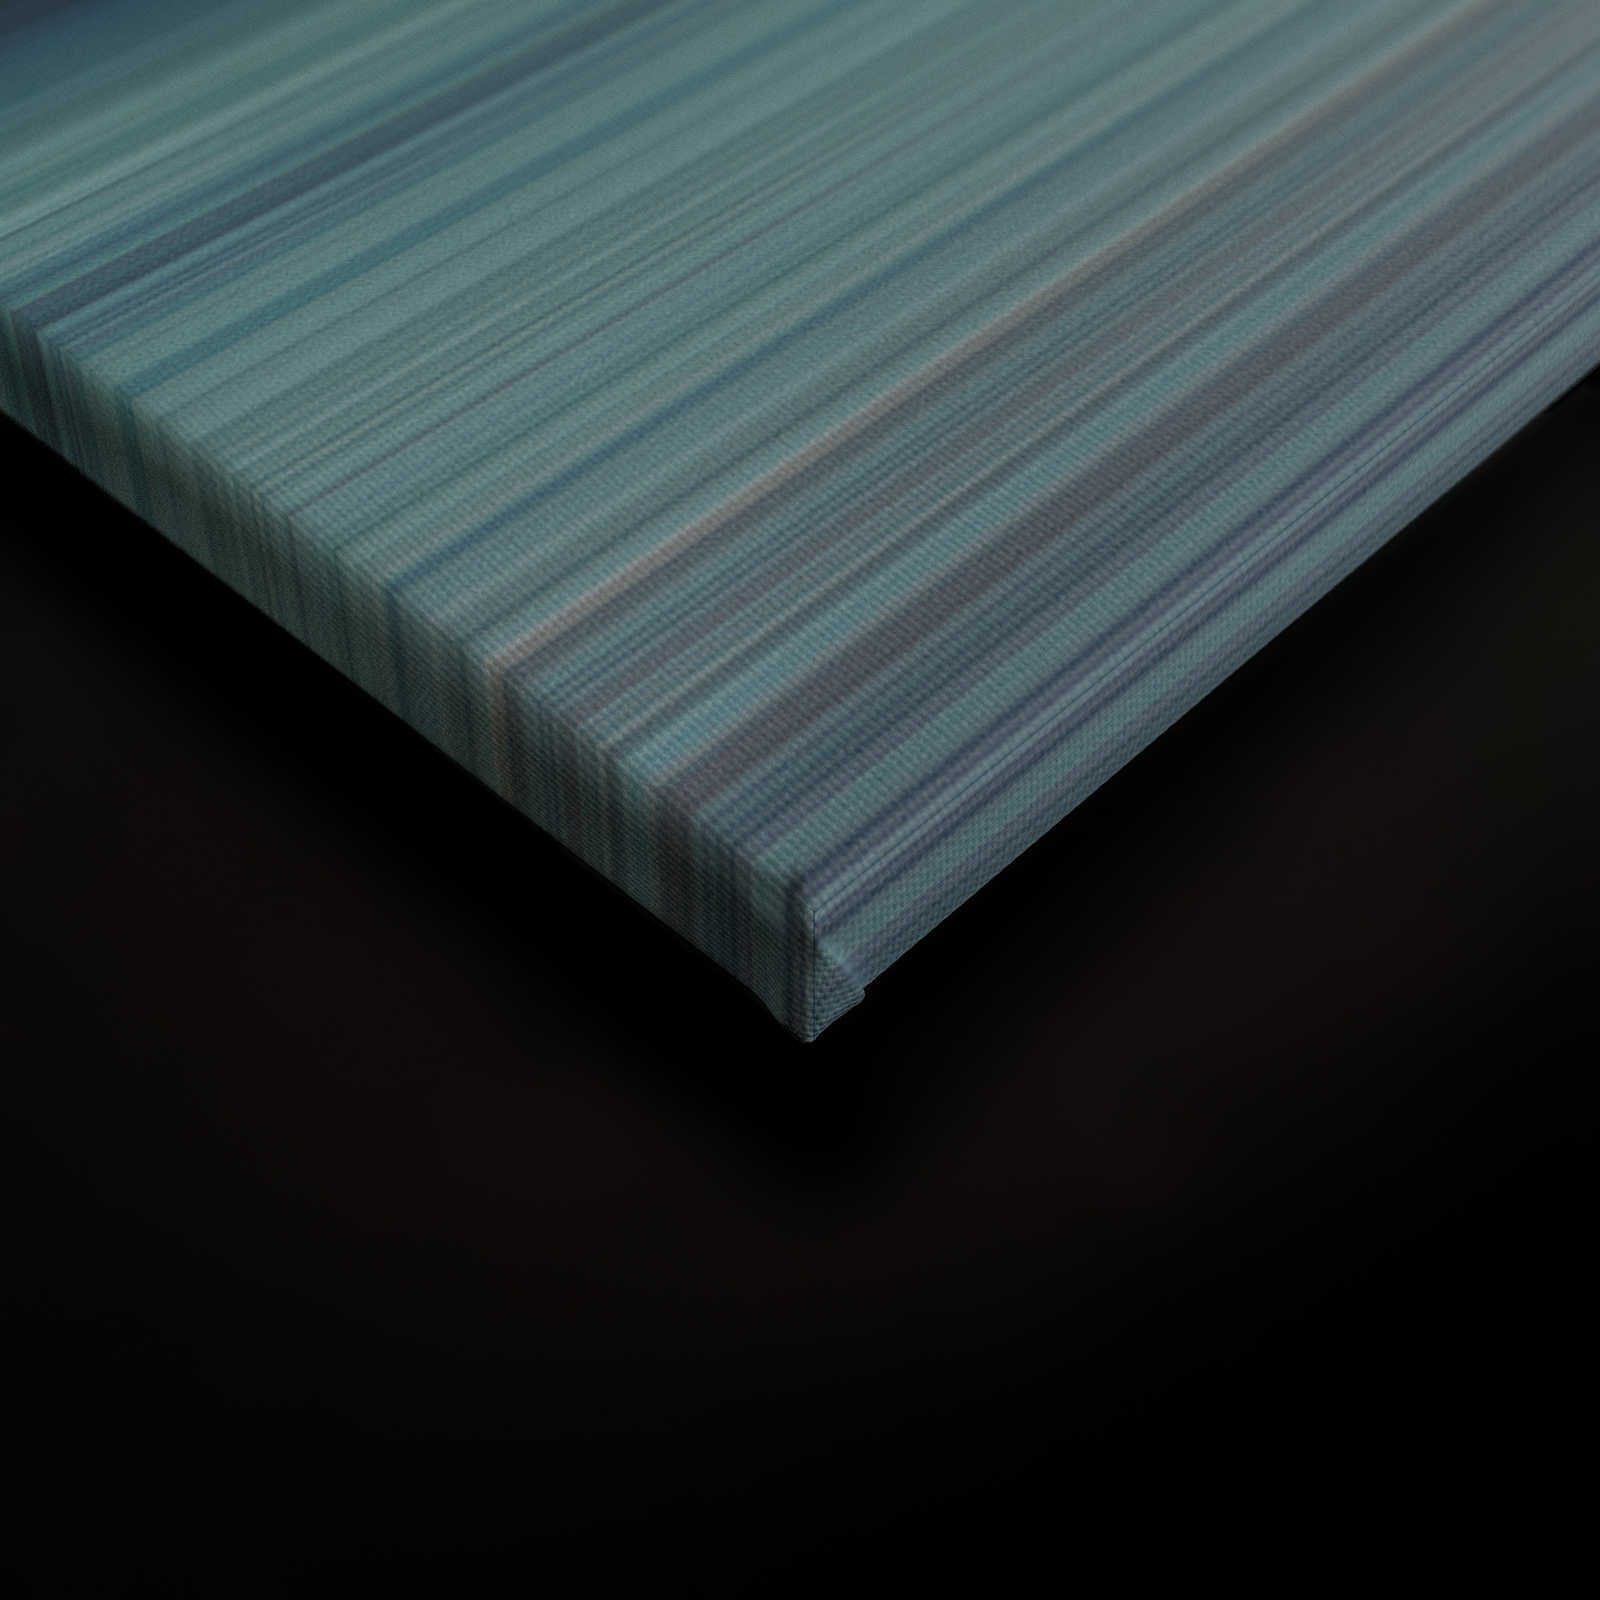             Horizon 1 - Toile paysage abstrait bleu - 1,20 m x 0,80 m
        